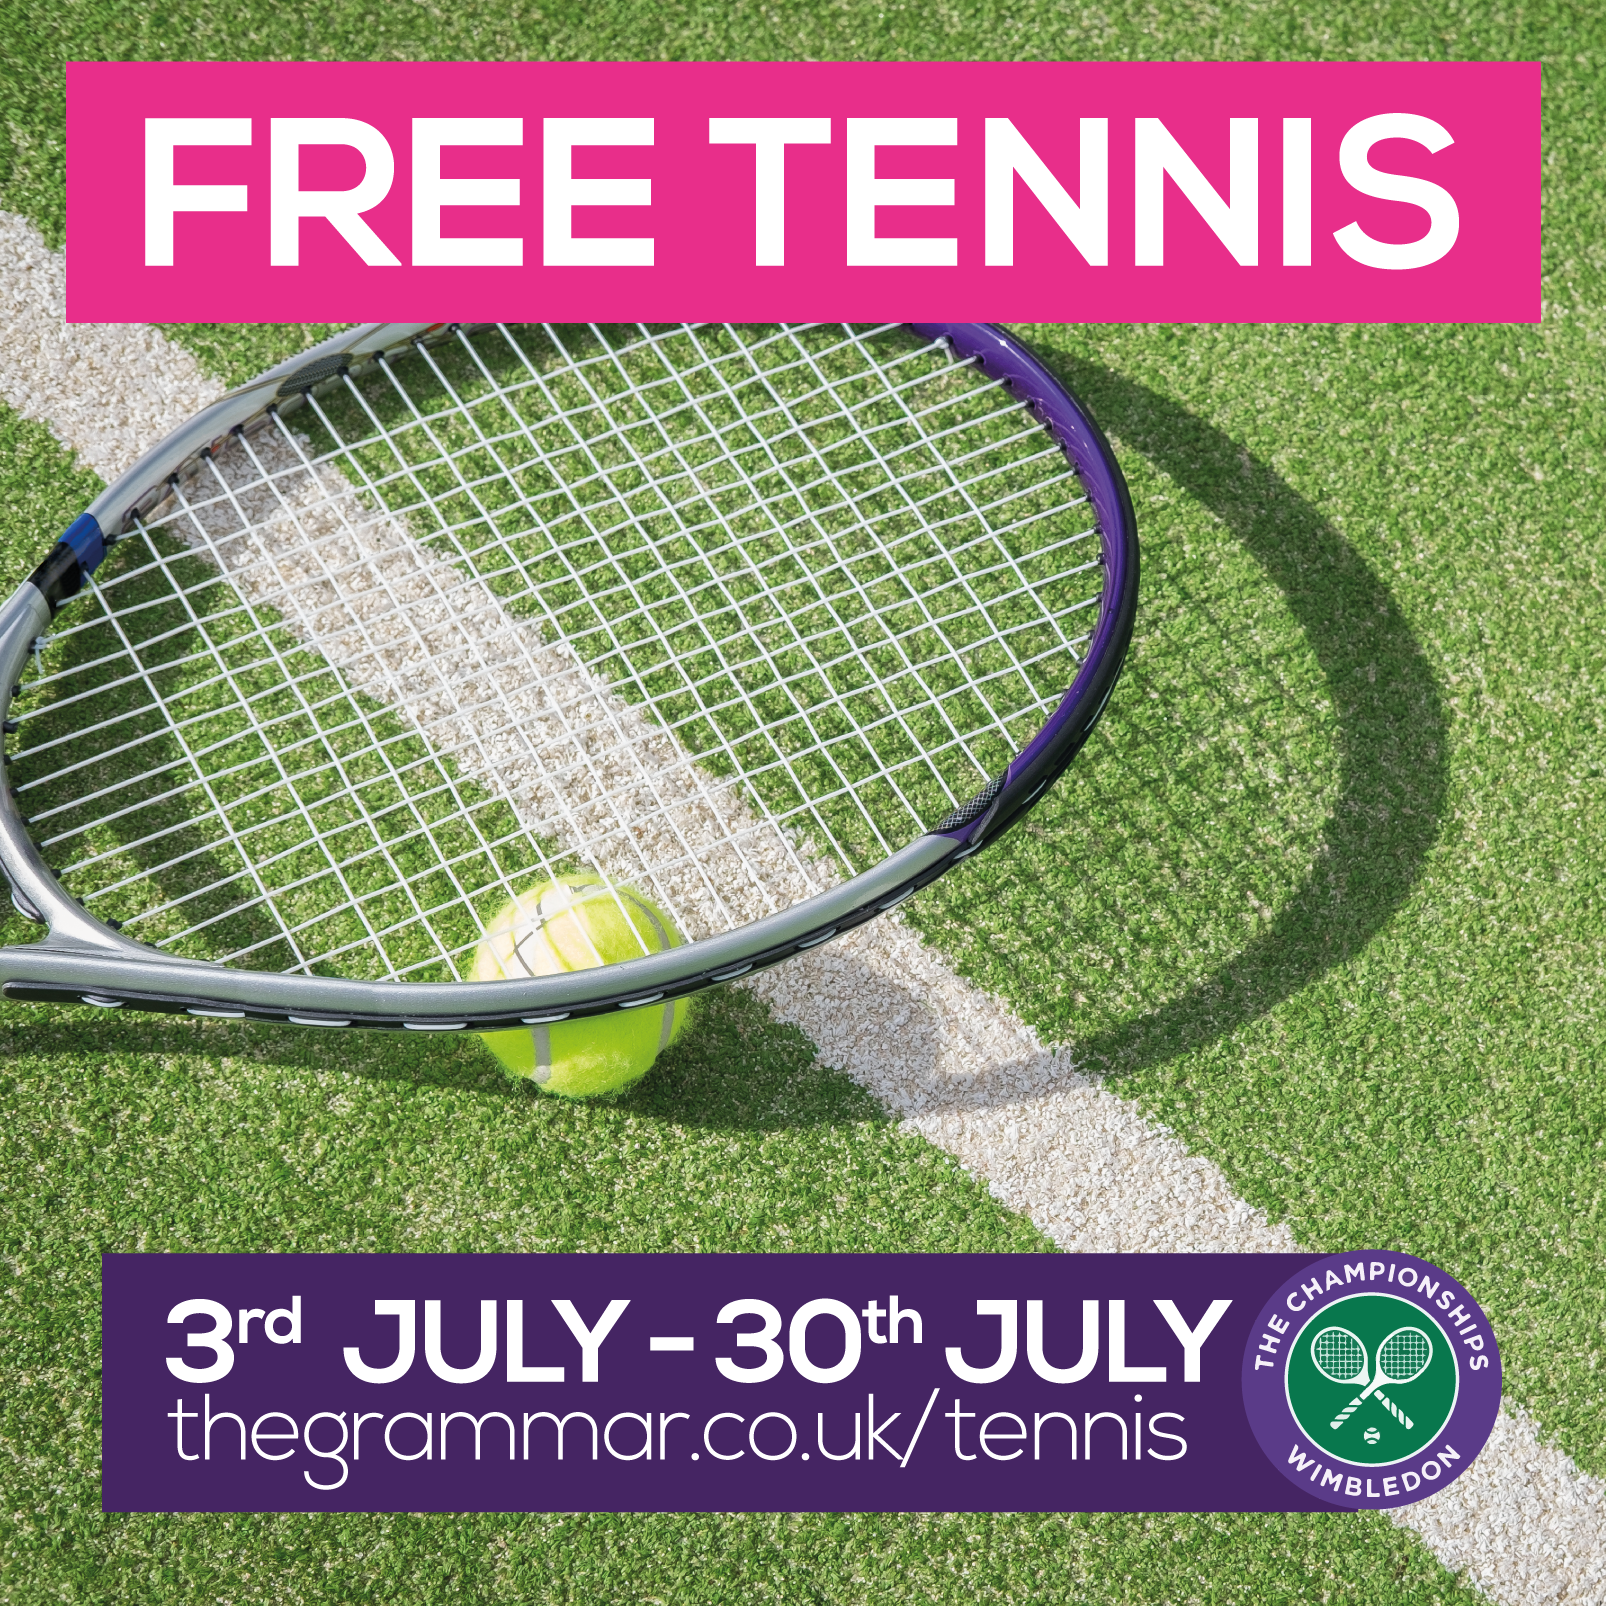 Free Tennis at The Grammar!